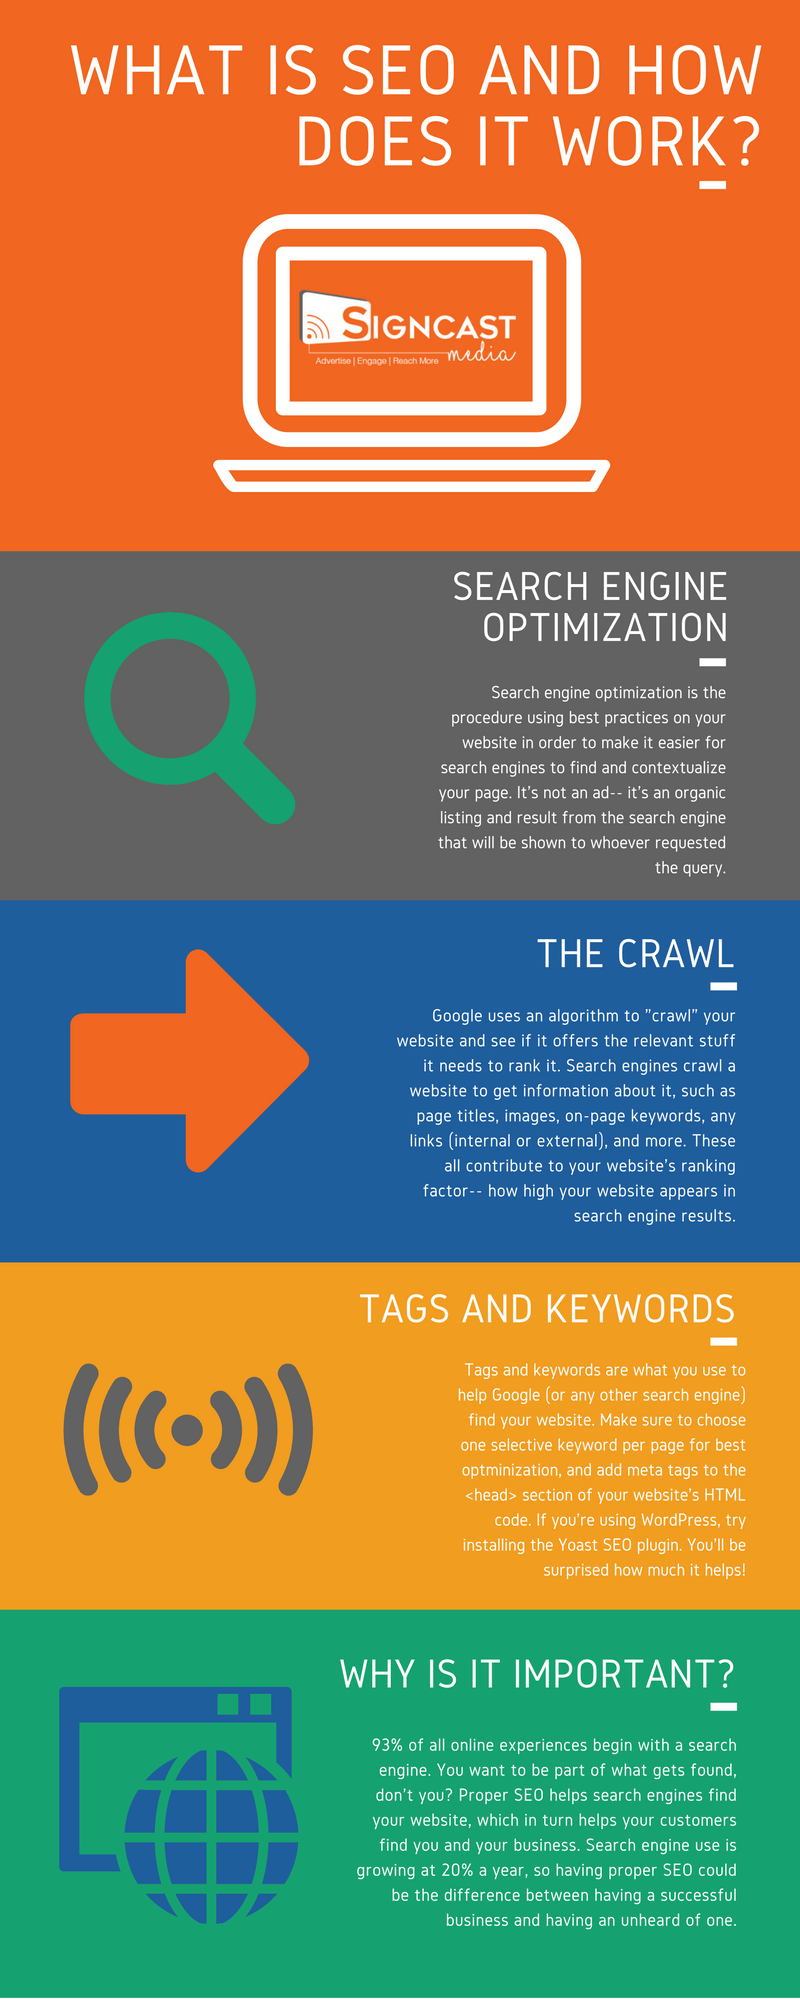 signcast media search engine optimization the crawl tags keywords meta data 